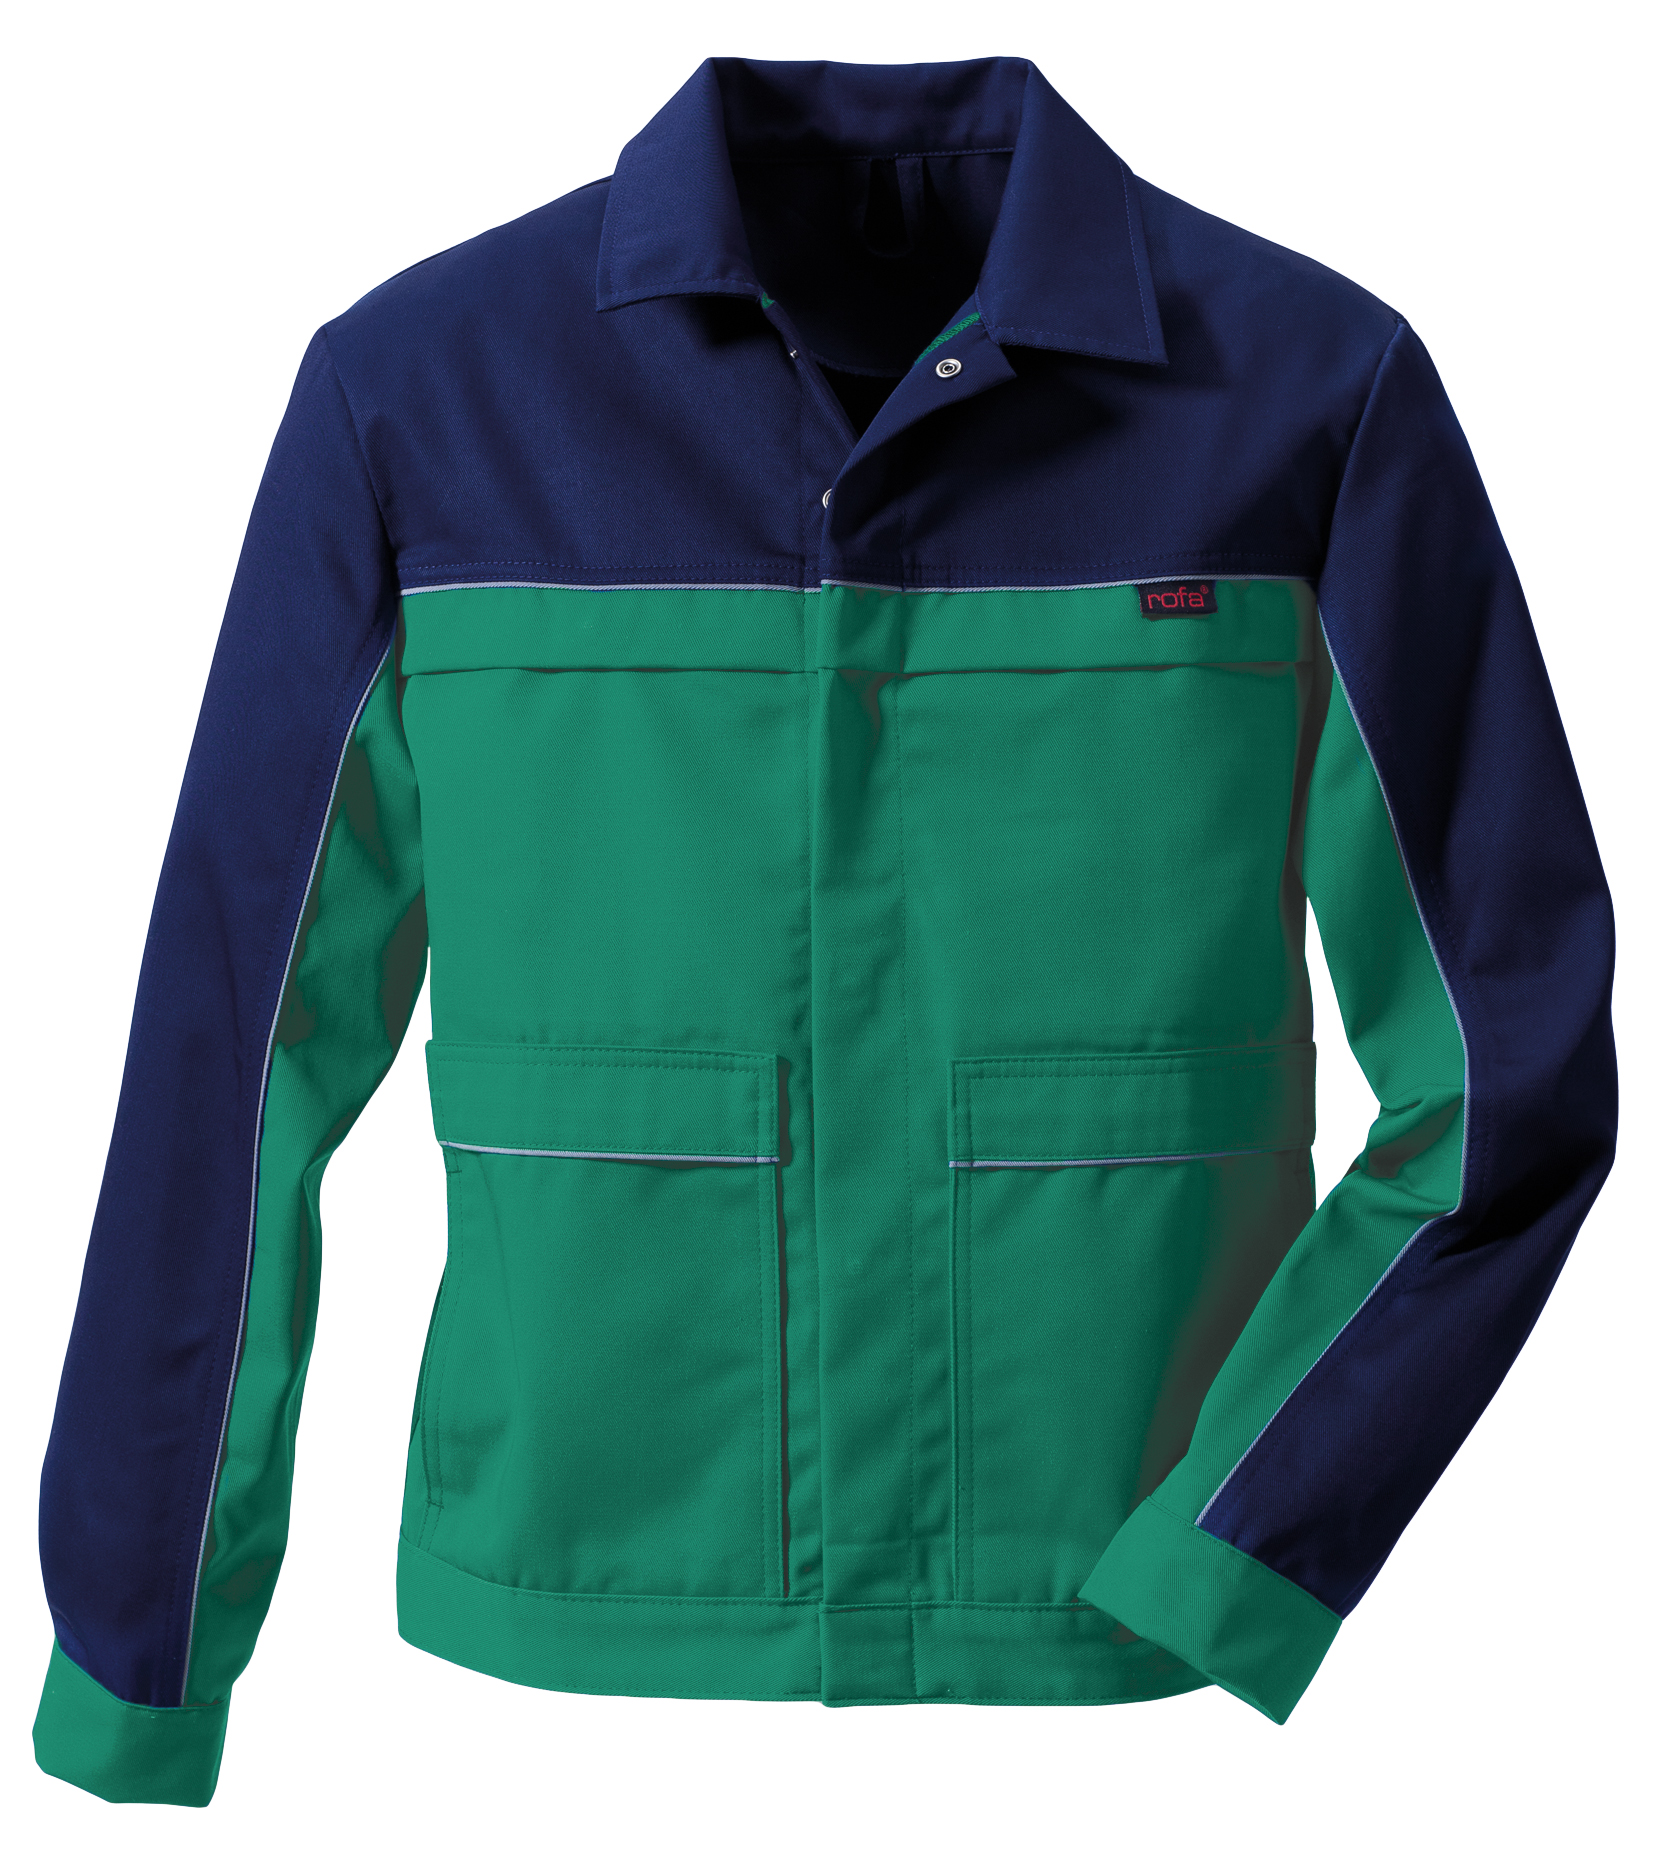 ROFA Bundjacke Arbeitsjacke Berufsjacke Schutzjacke Arbeitskleidung Berufskleidung grün marine